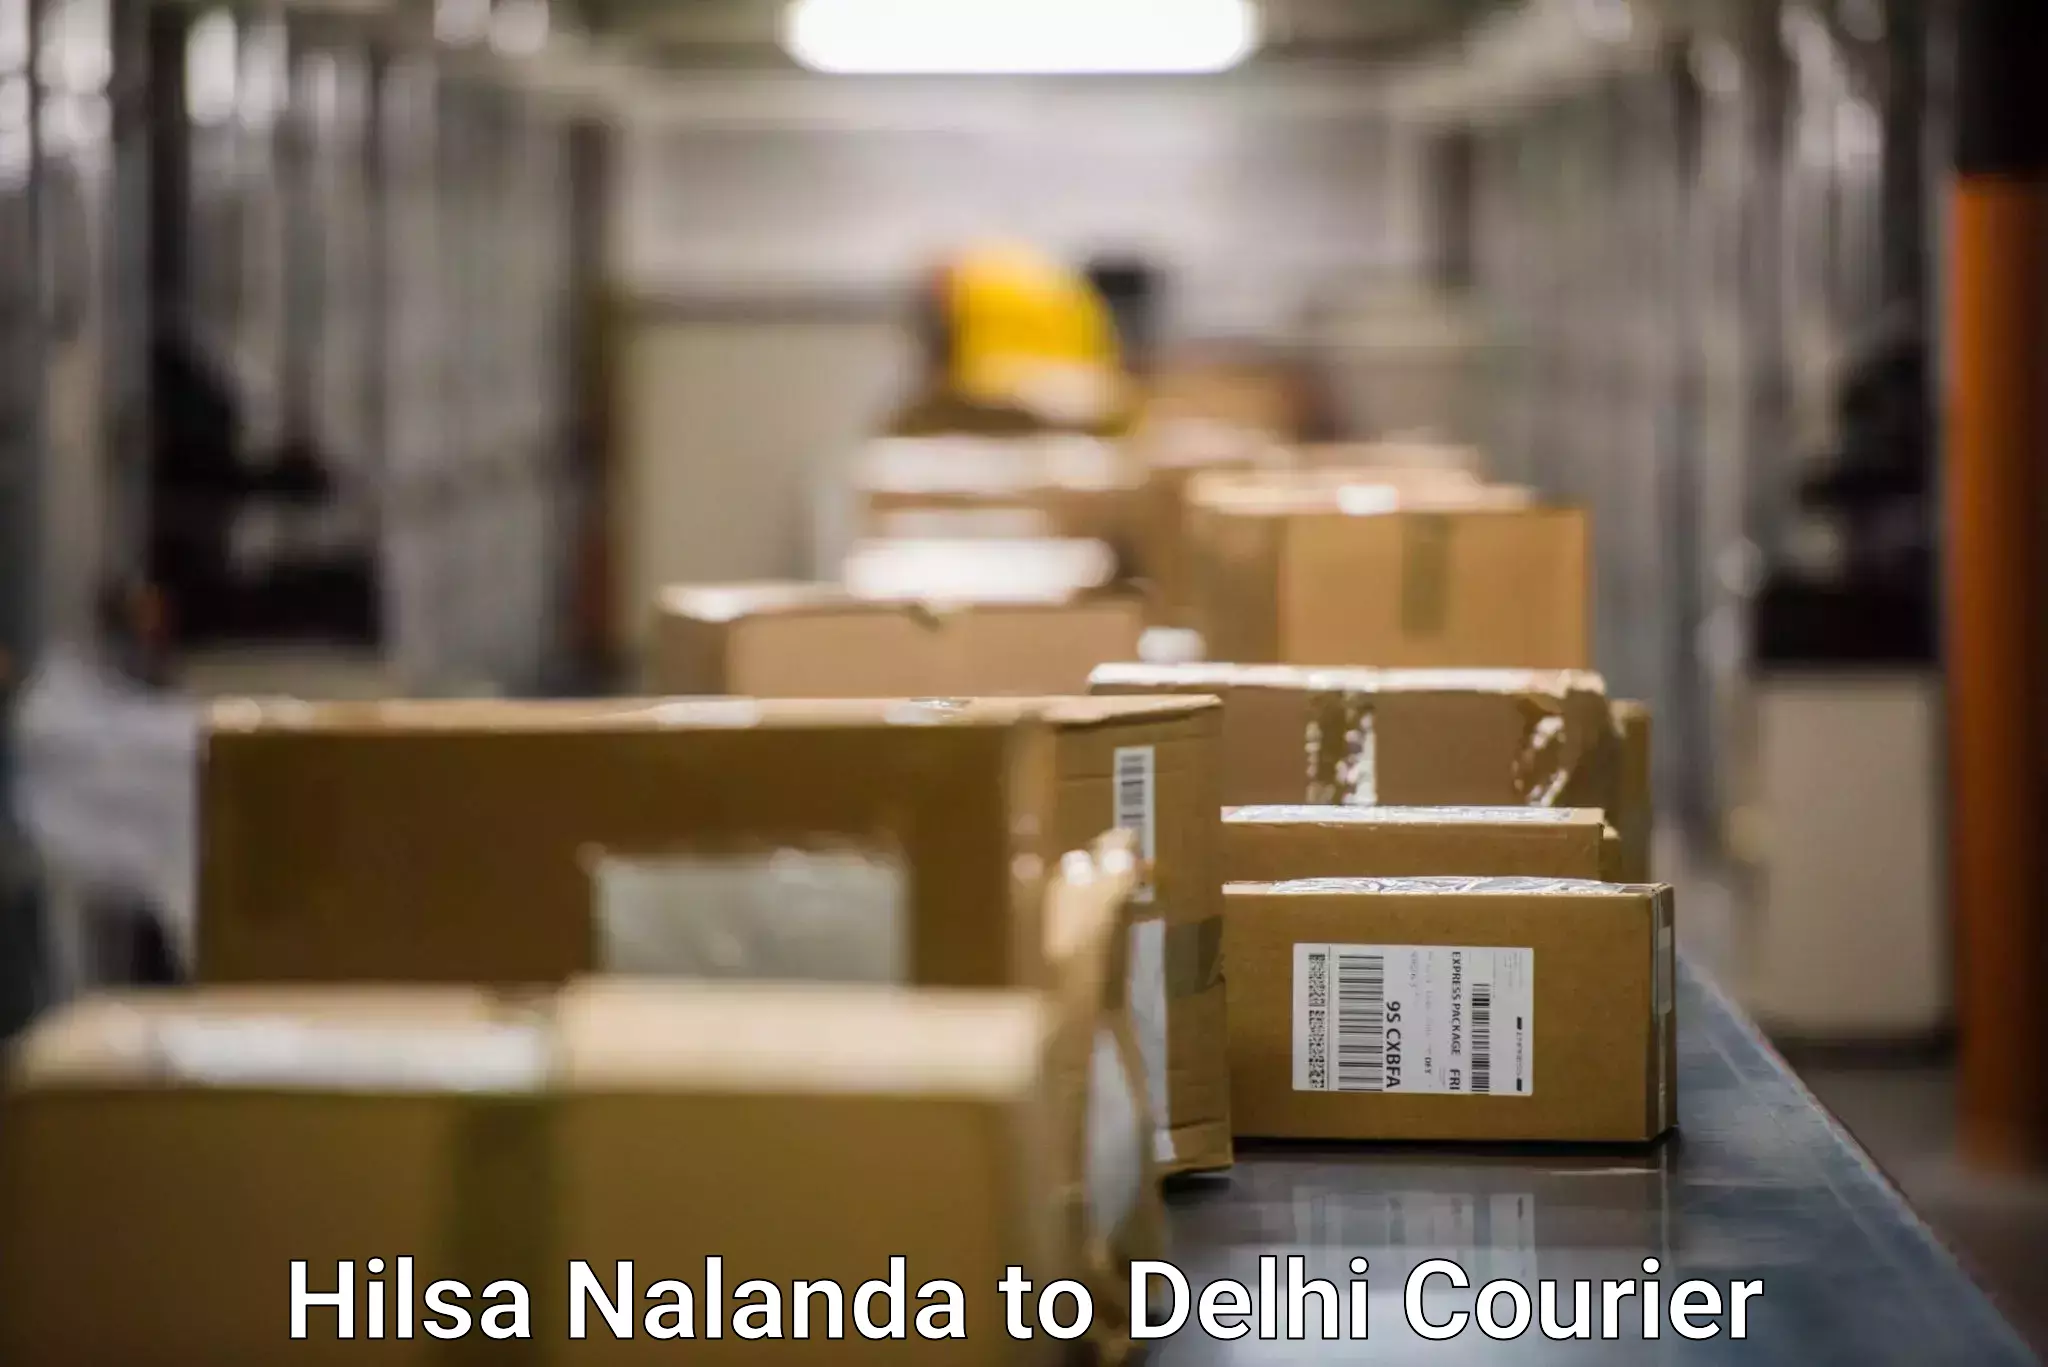 Efficient shipping platforms Hilsa Nalanda to Lodhi Road